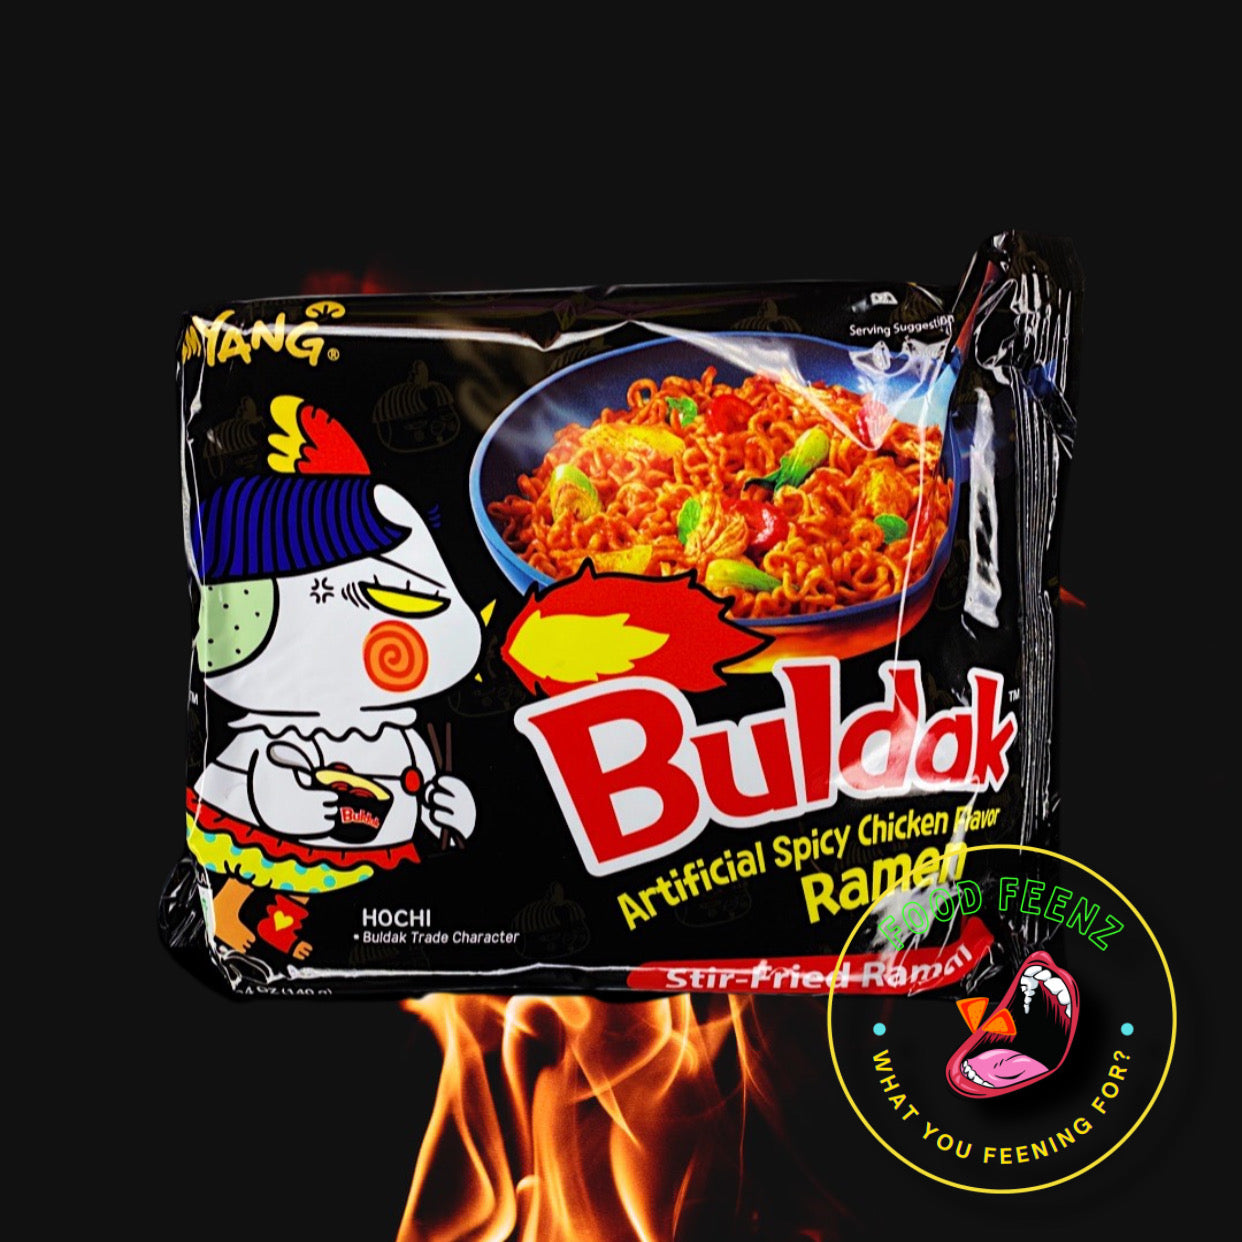 Buldak Original Spicy Chicken Ramen (Korea)